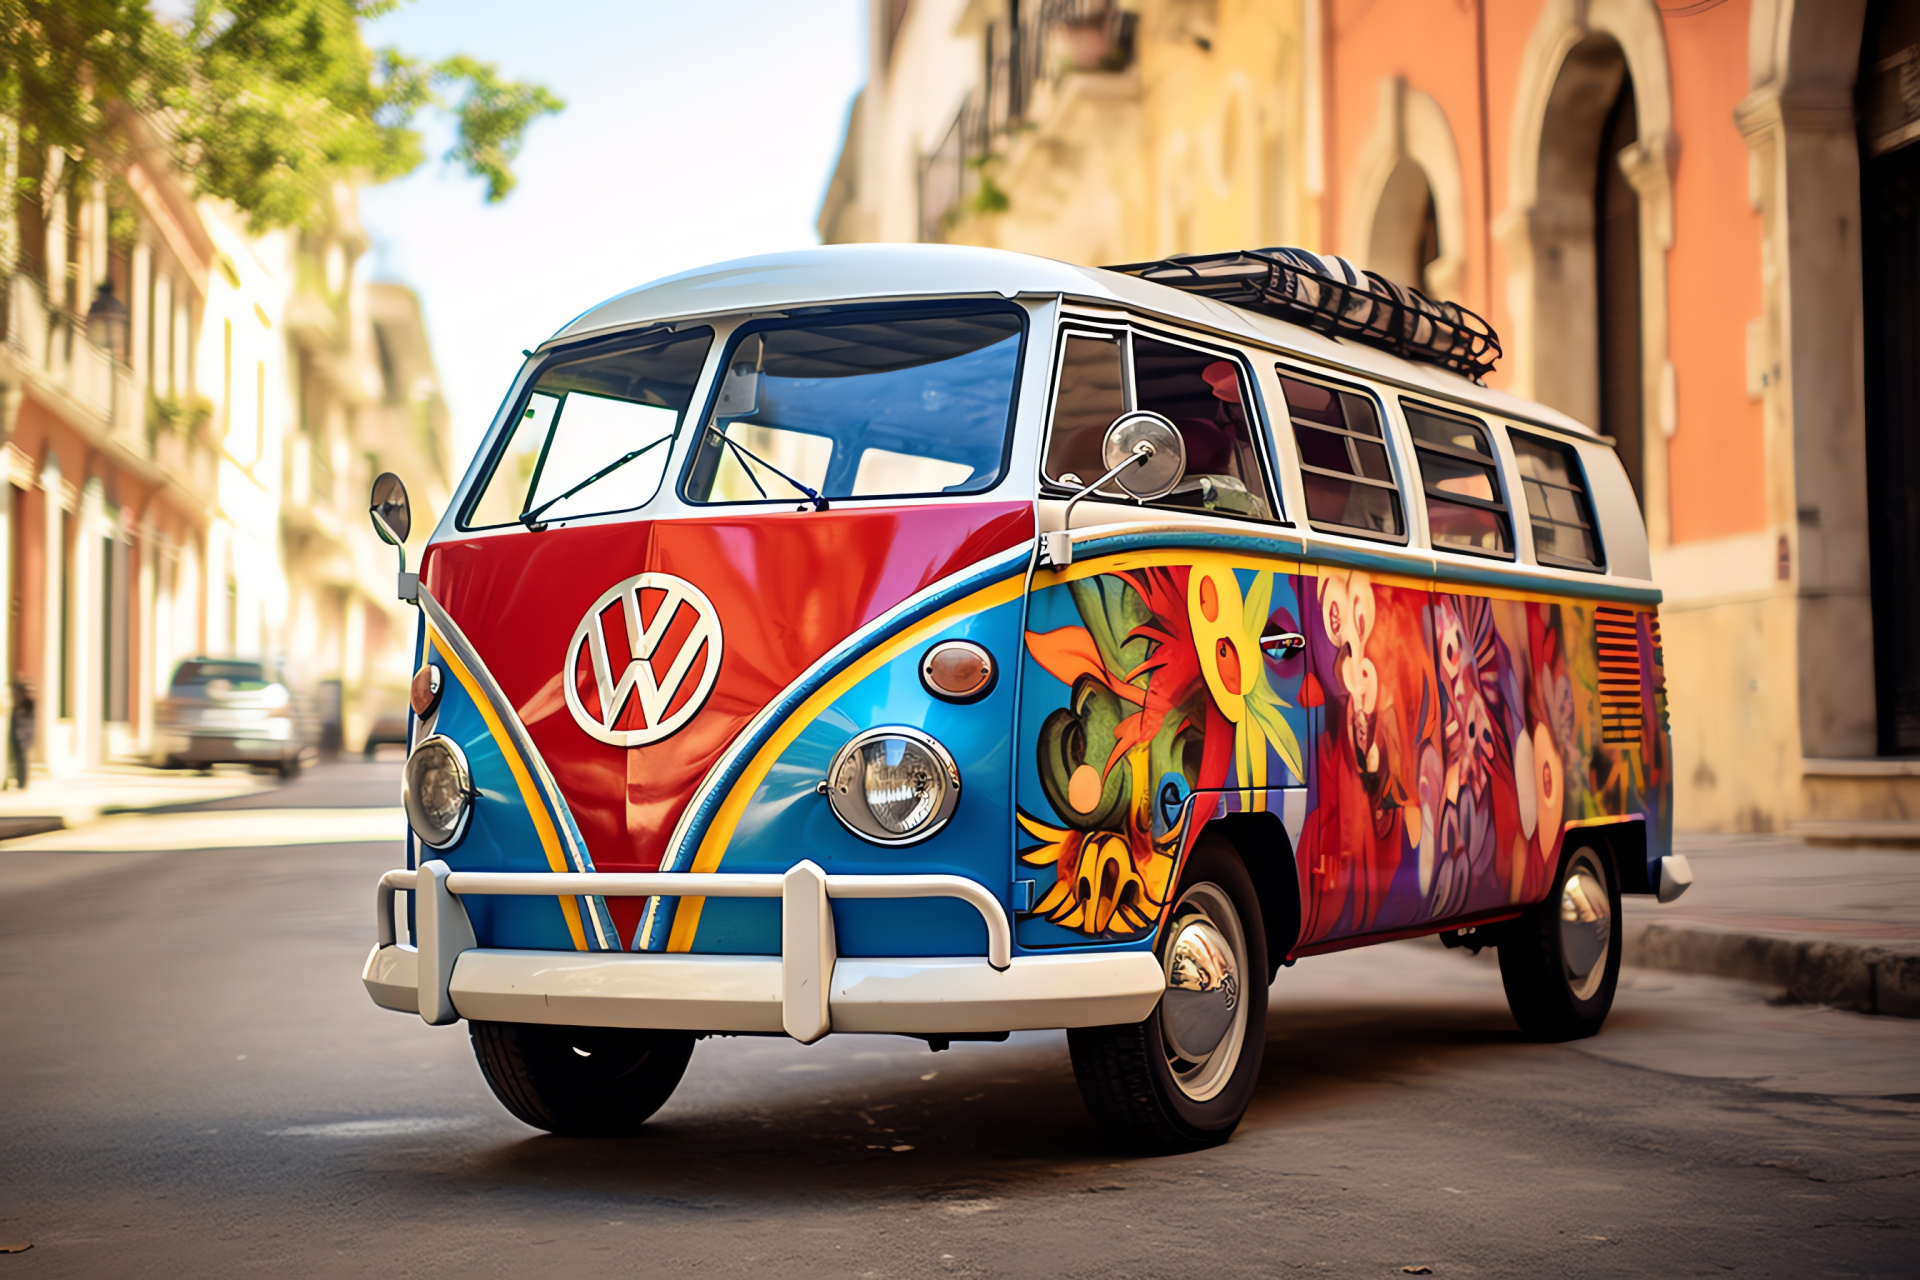 VW Bus Havana streets, Cuban flag artwork, musical influence, colonial architectural charm, classic vehicles, HD Desktop Image